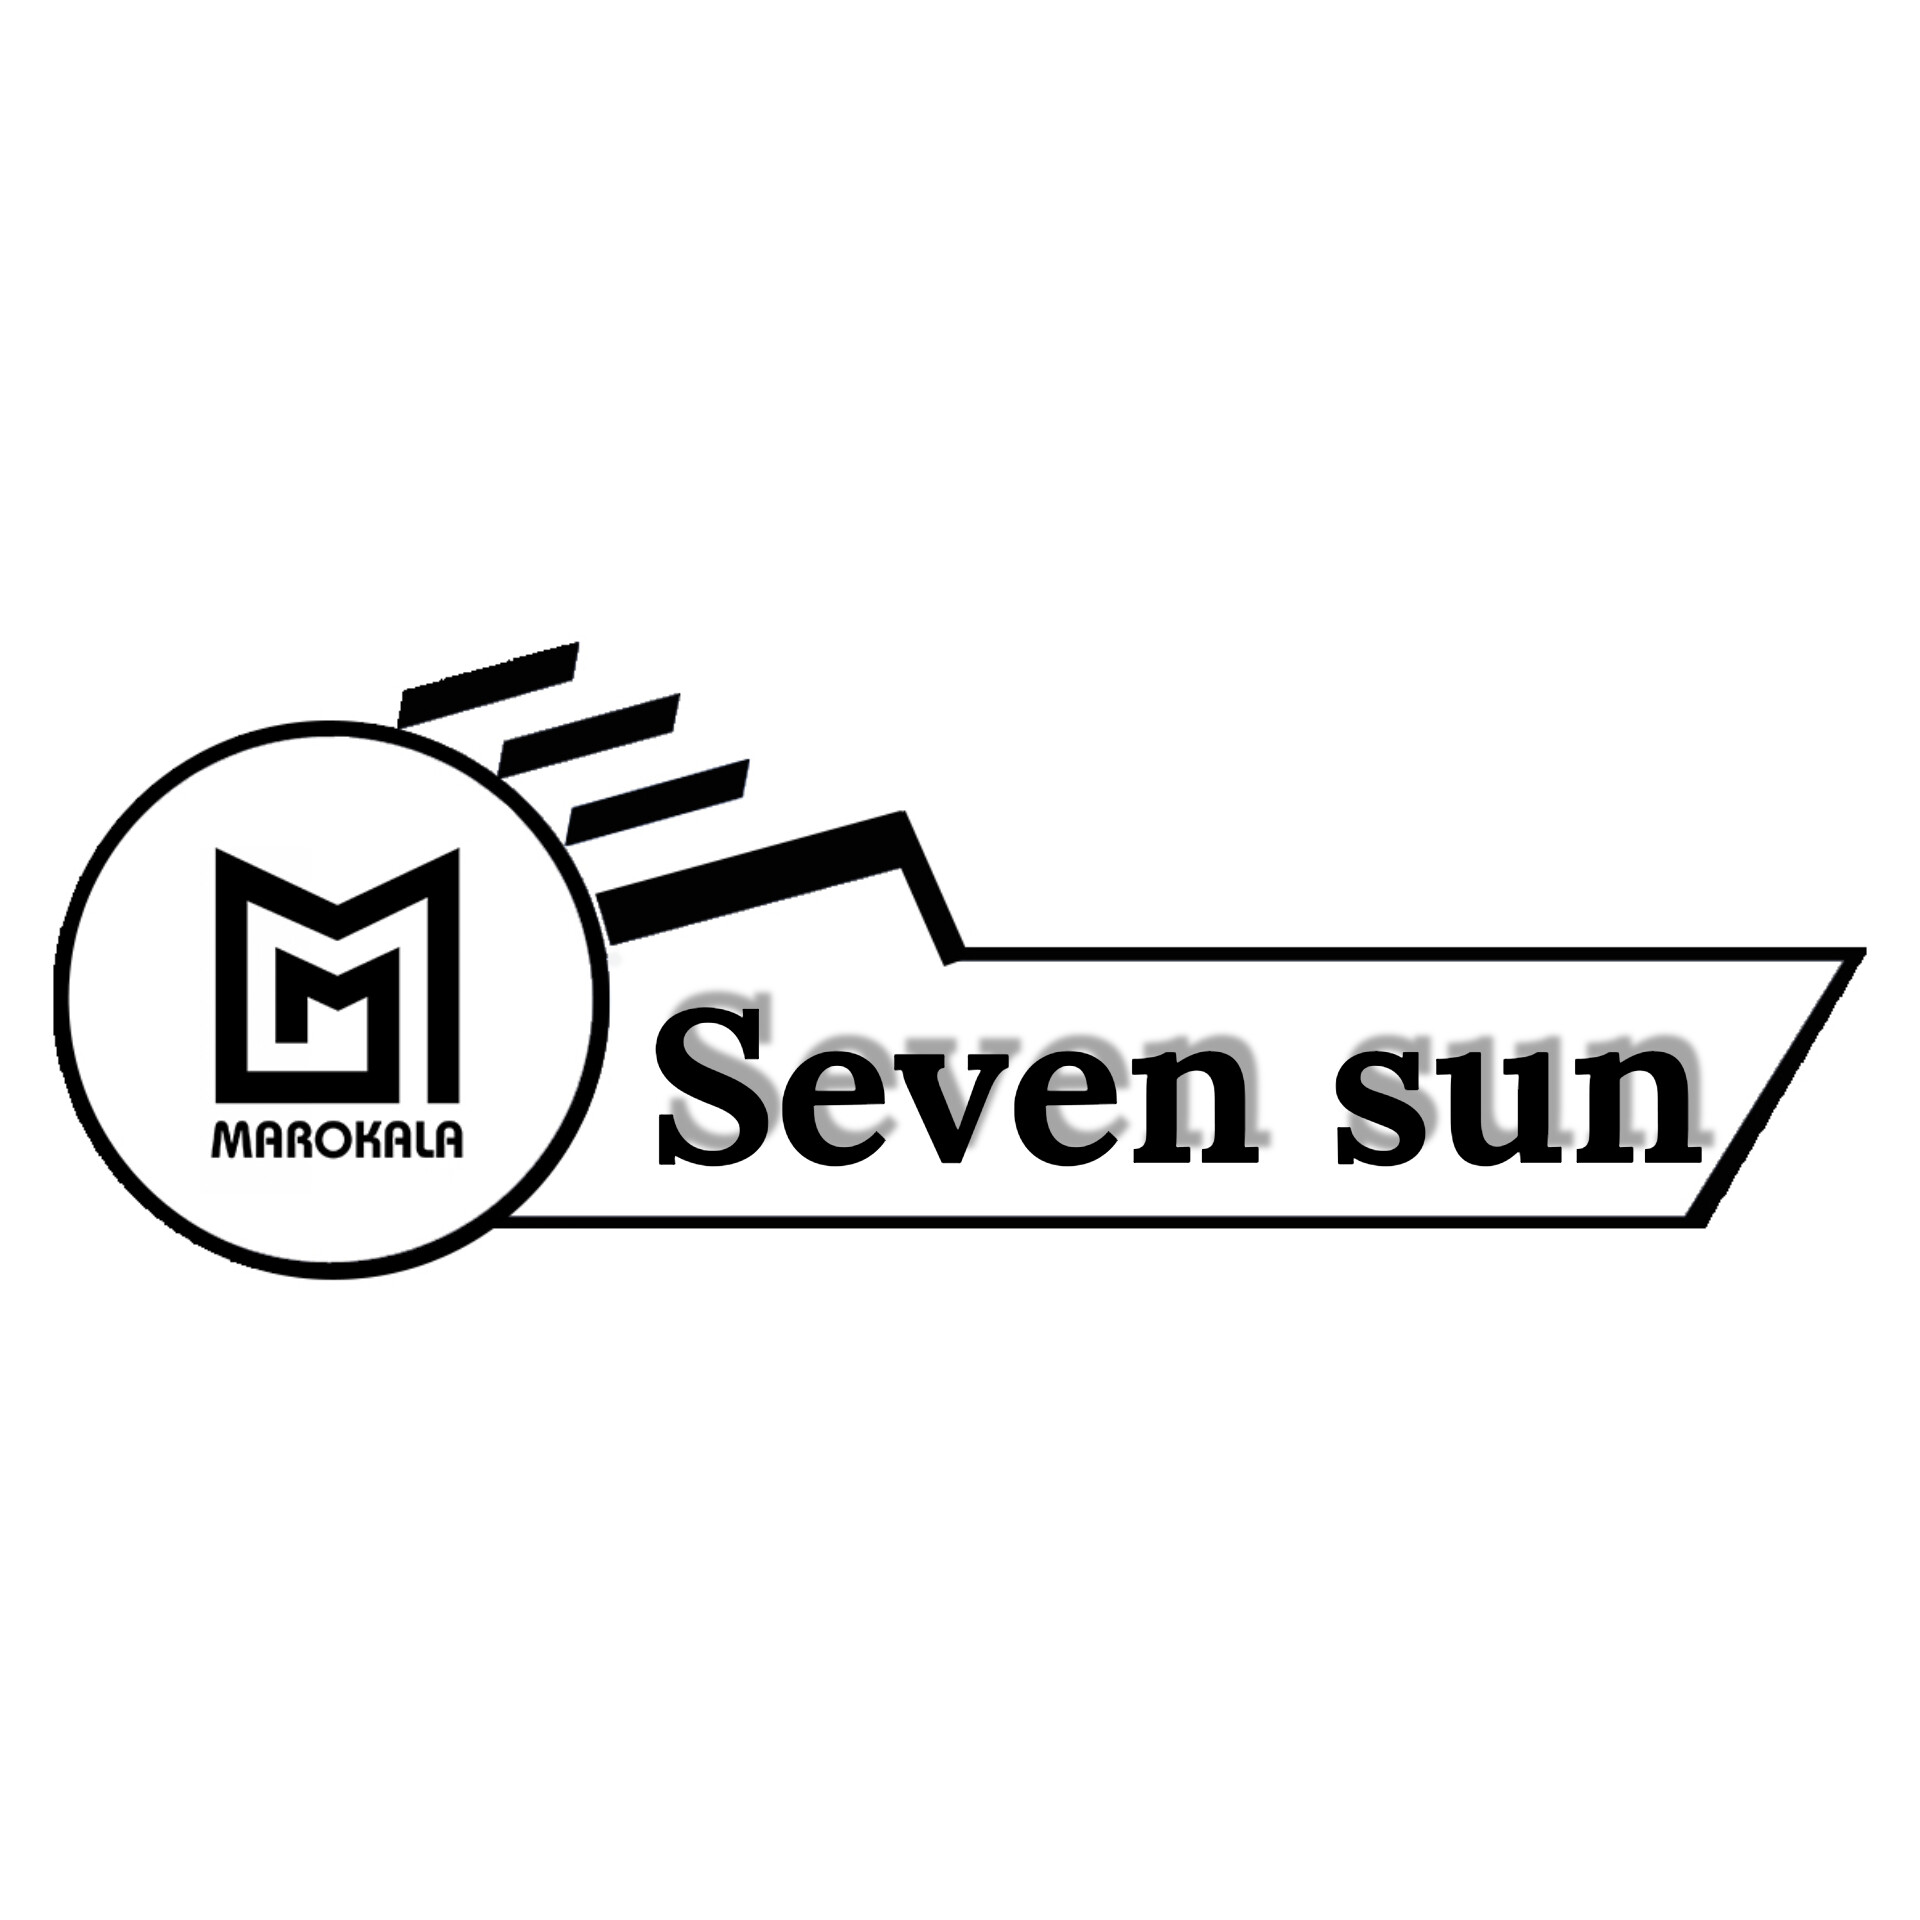 SEVEN SUN